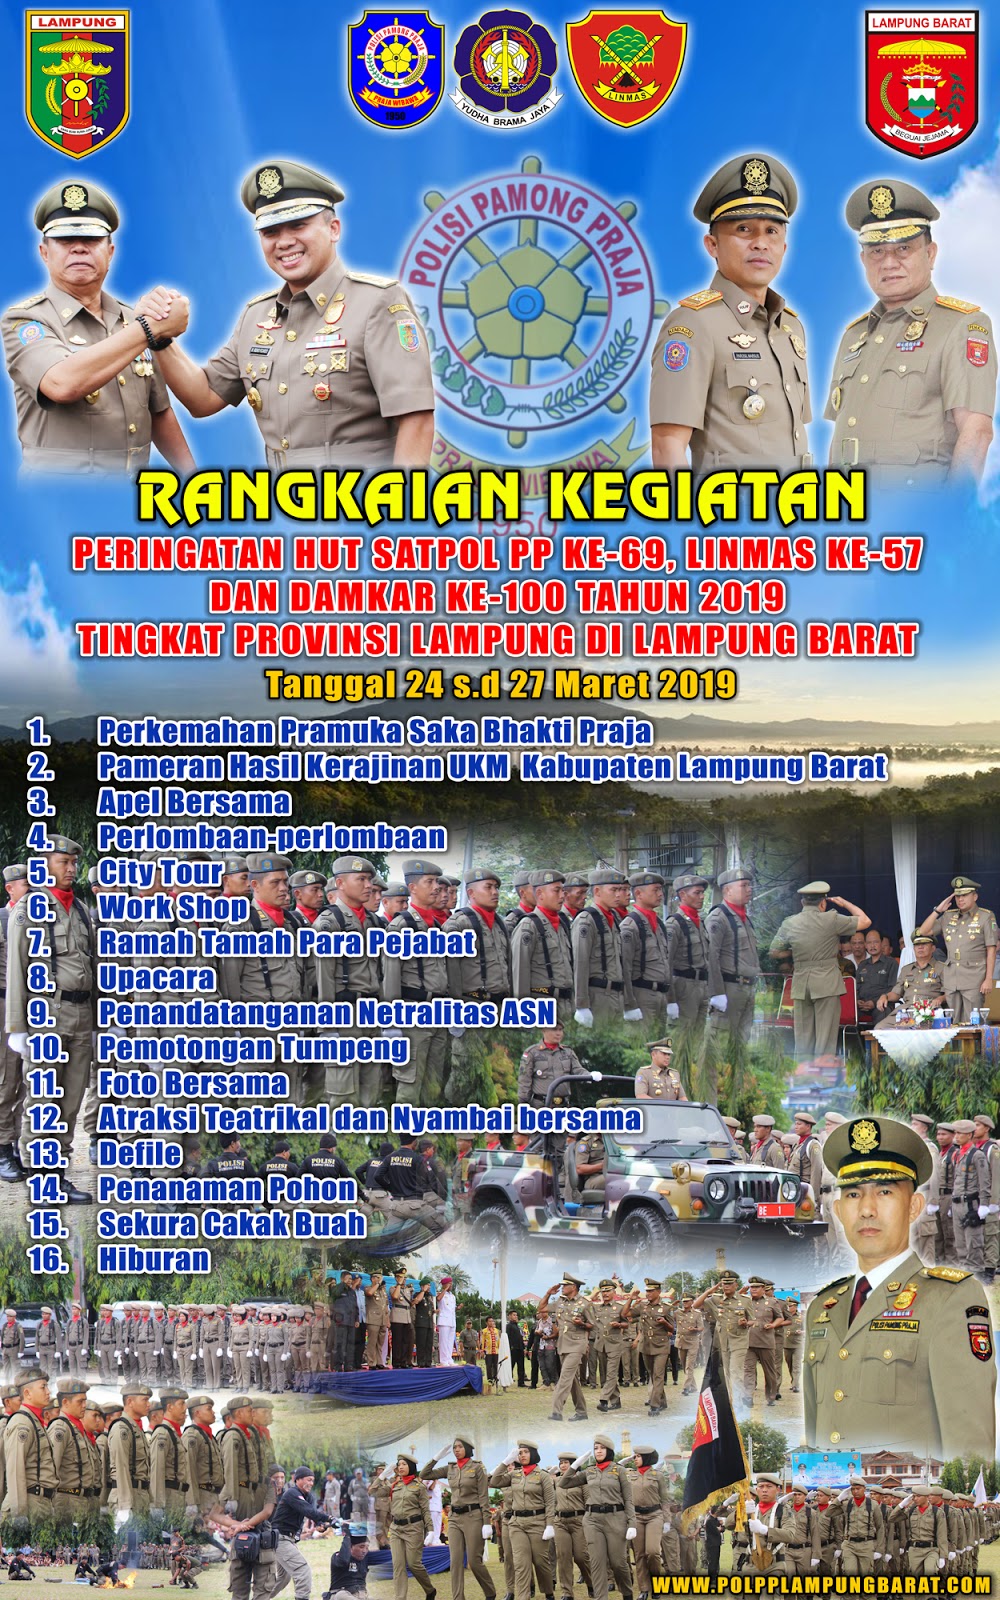 Banner Baliho Spanduk Peringatan Hut Satpol Pp Ke 69 Linmas Ke 57 Damkar Ke 100 Tingkat Provinsi Lampung